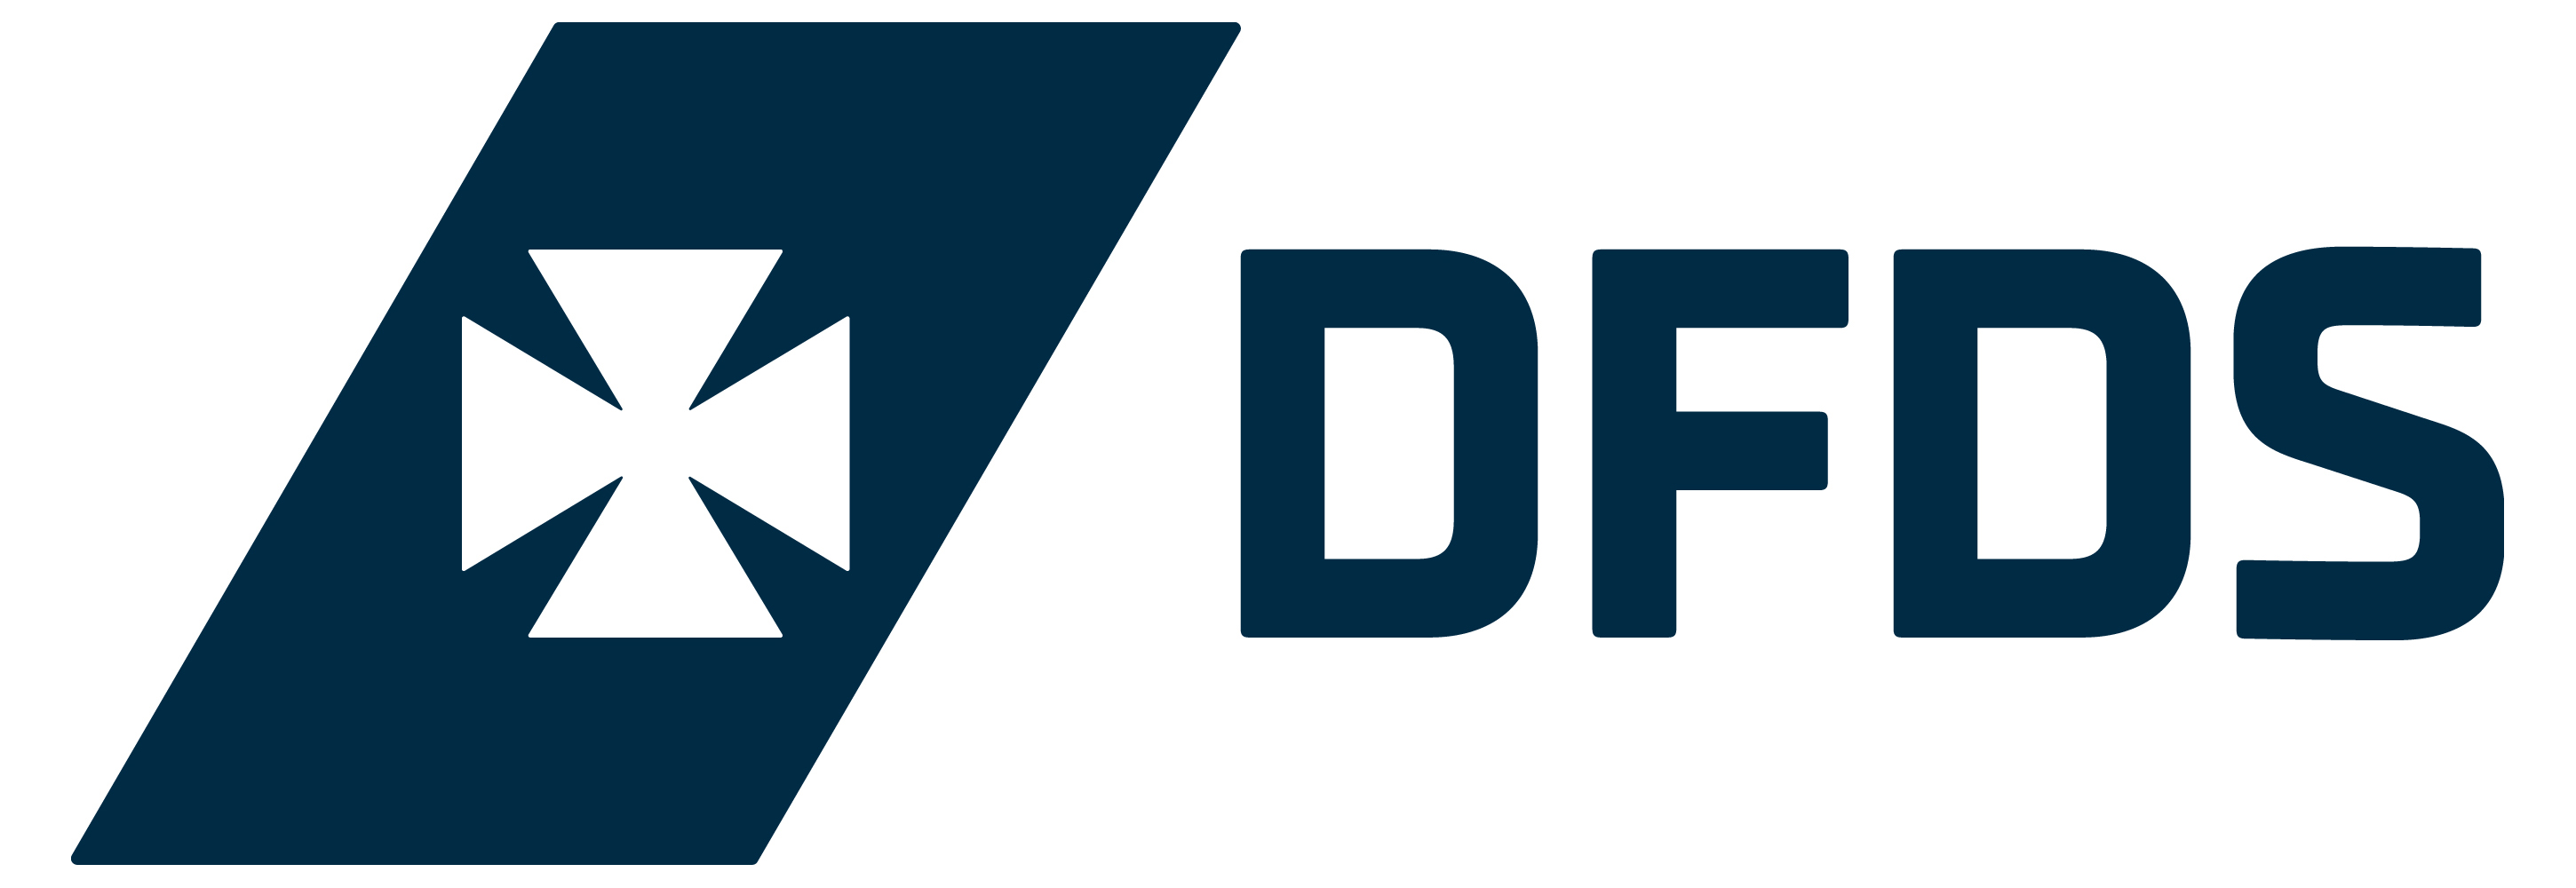 DFDS logo